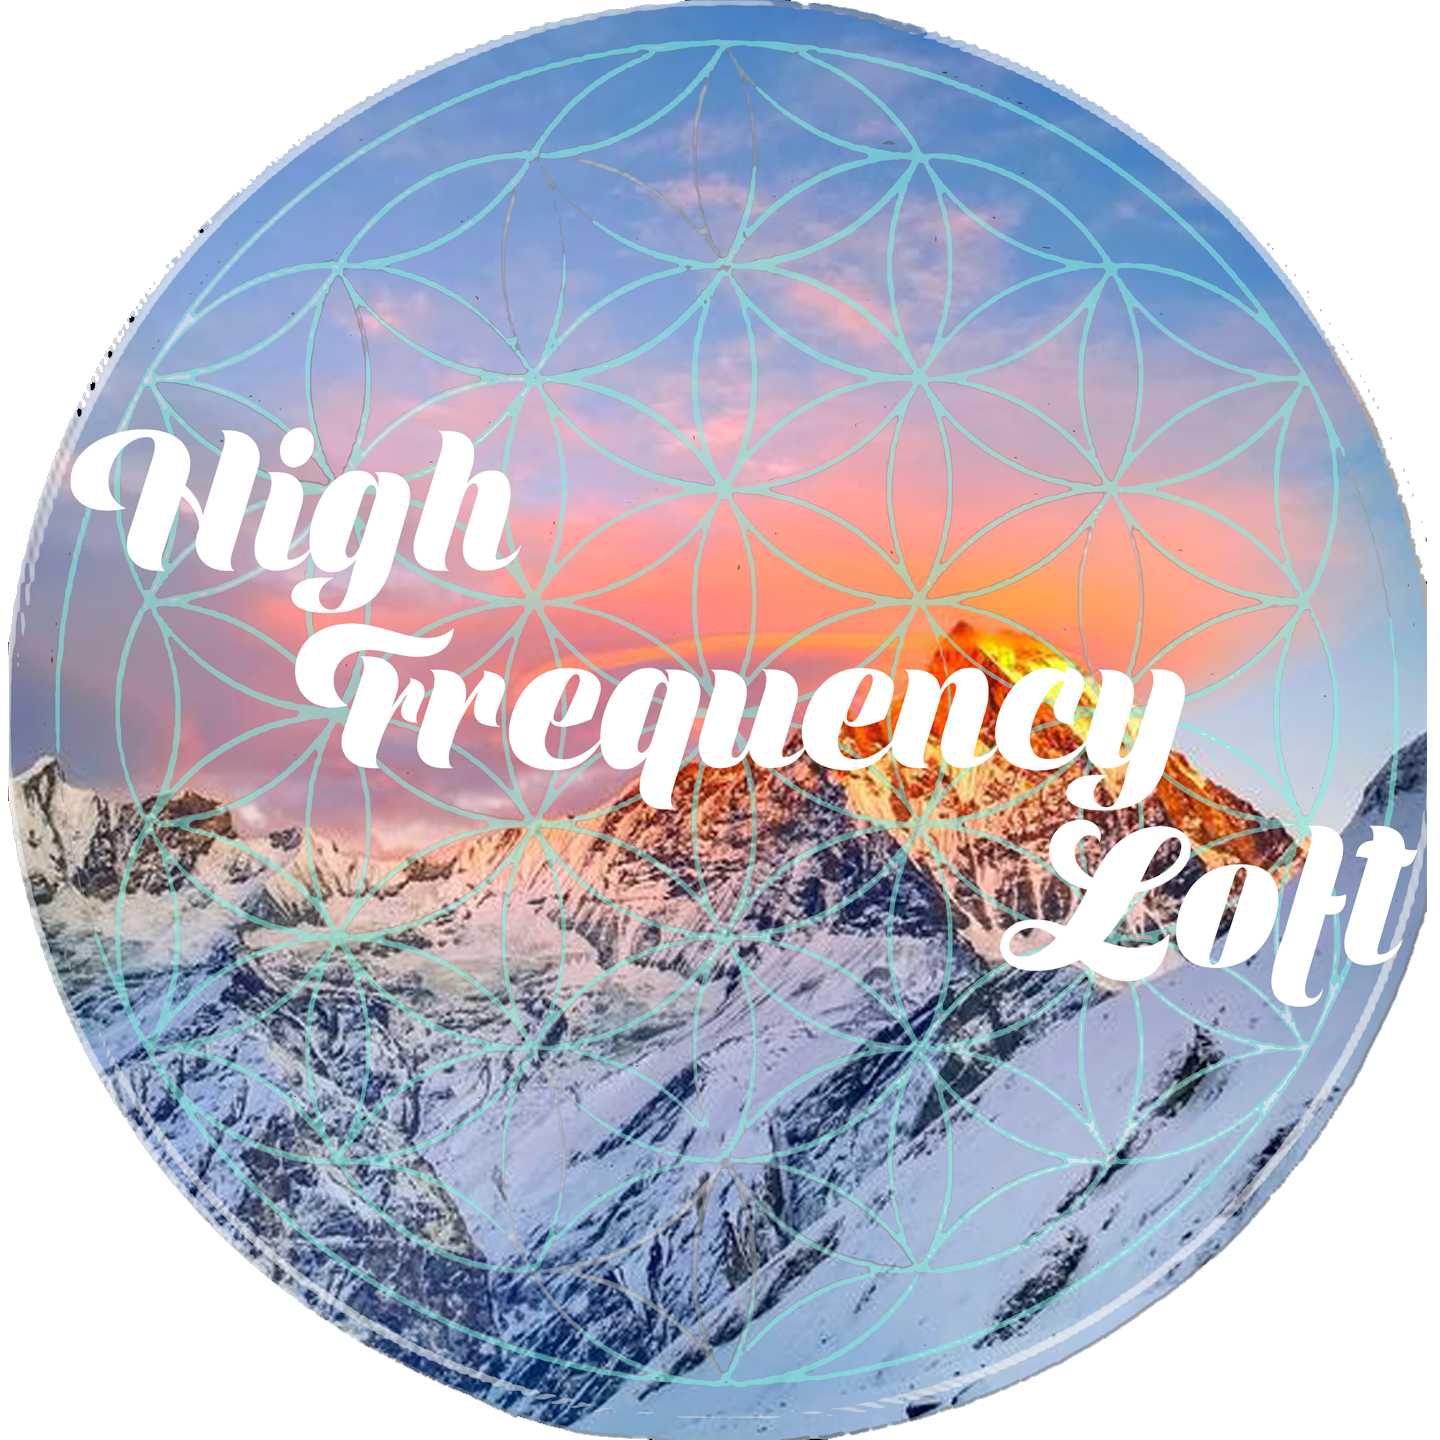 High Frequency Loft Logo & Marketing Materials